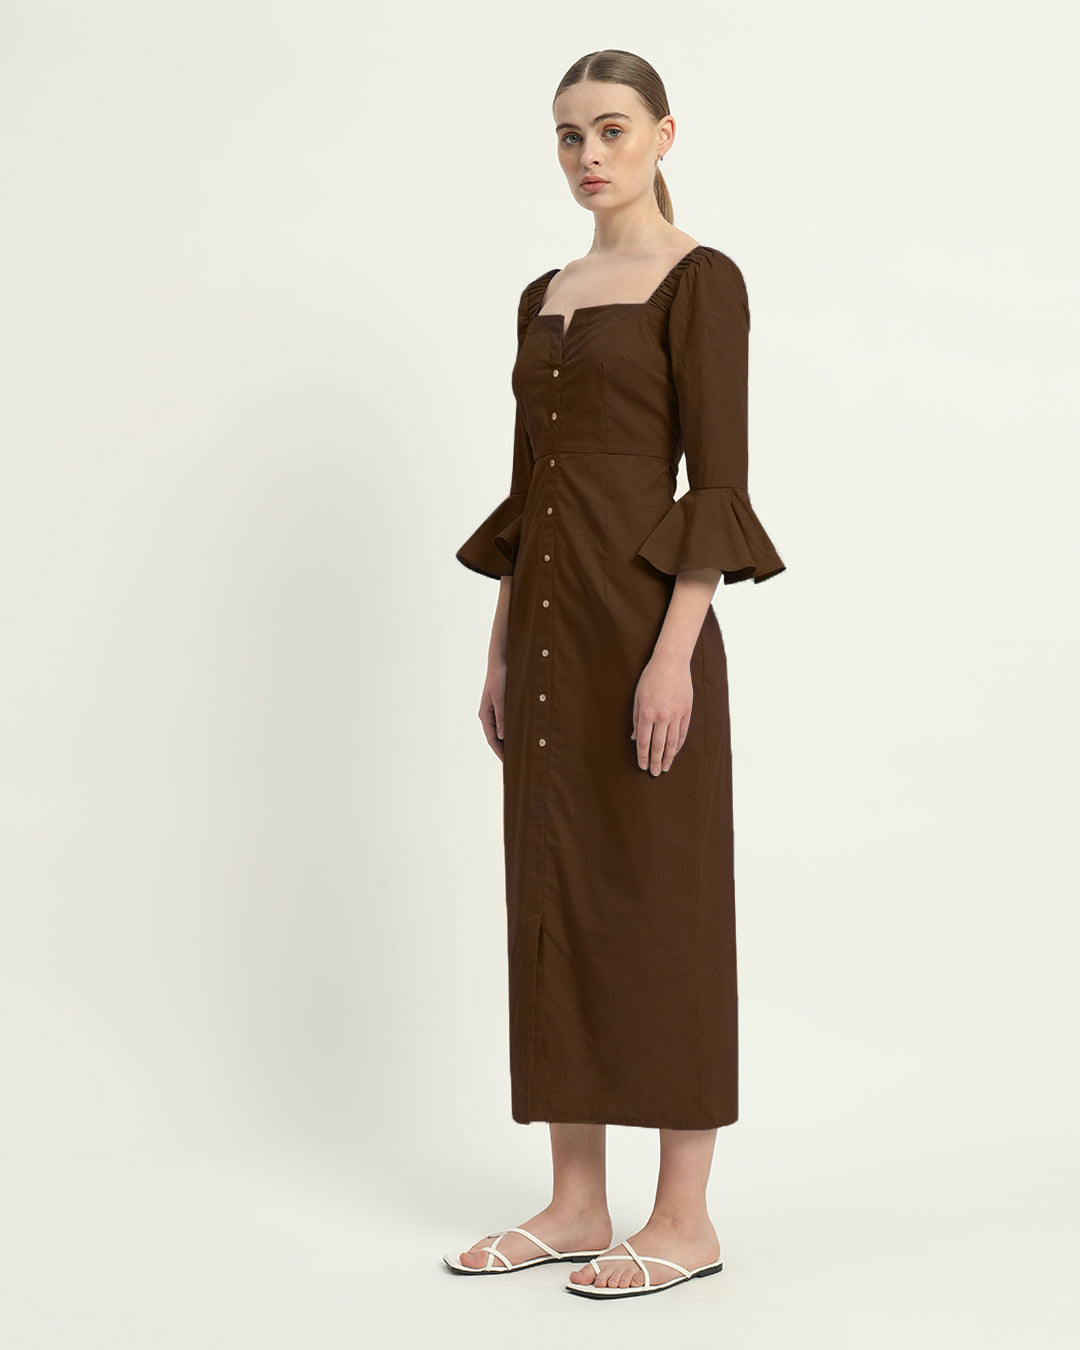 The Nutshell Rosendale Cotton Dress